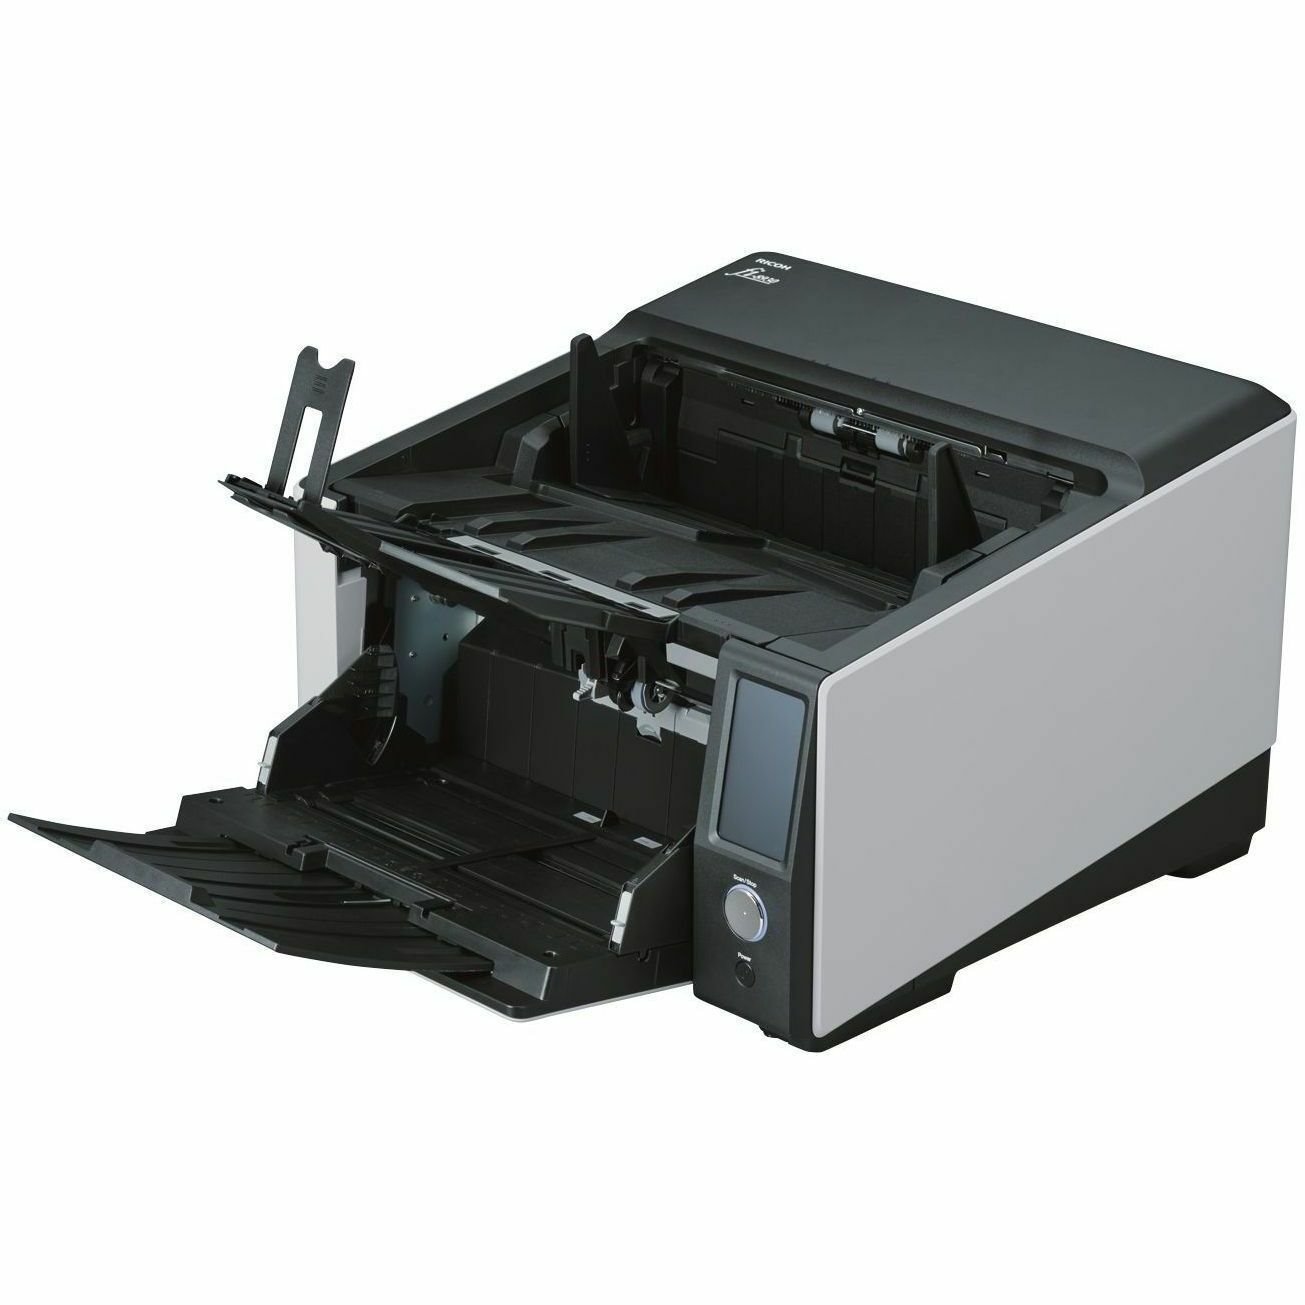 Ricoh ImageScanner fi-8930 ADF/Manual Feed Scanner - 600 dpi Optical - Black, Light Gray